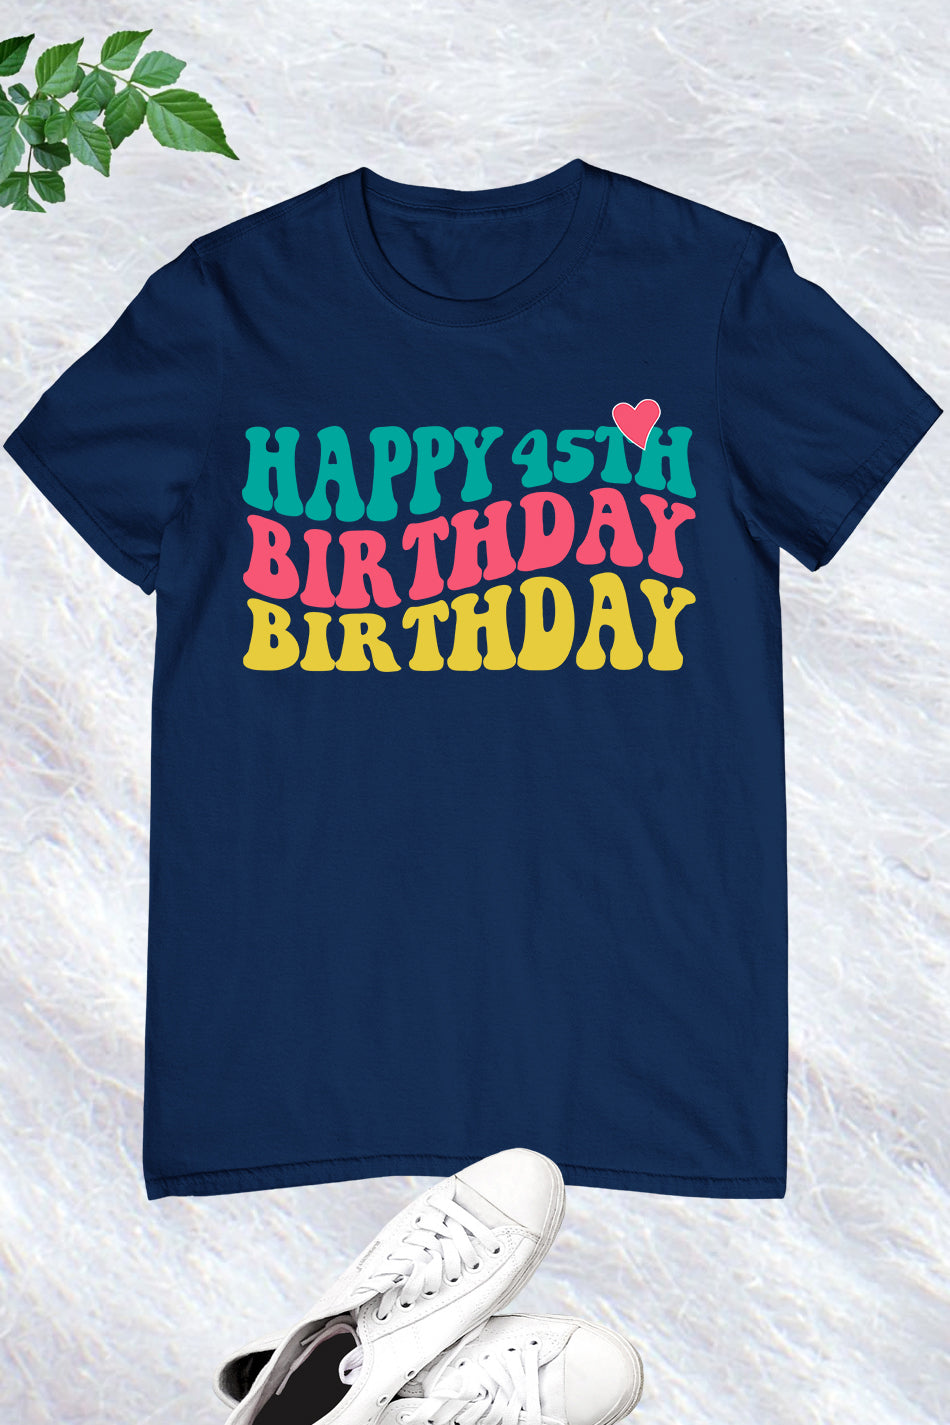 Happy 45th Birthday Shirt